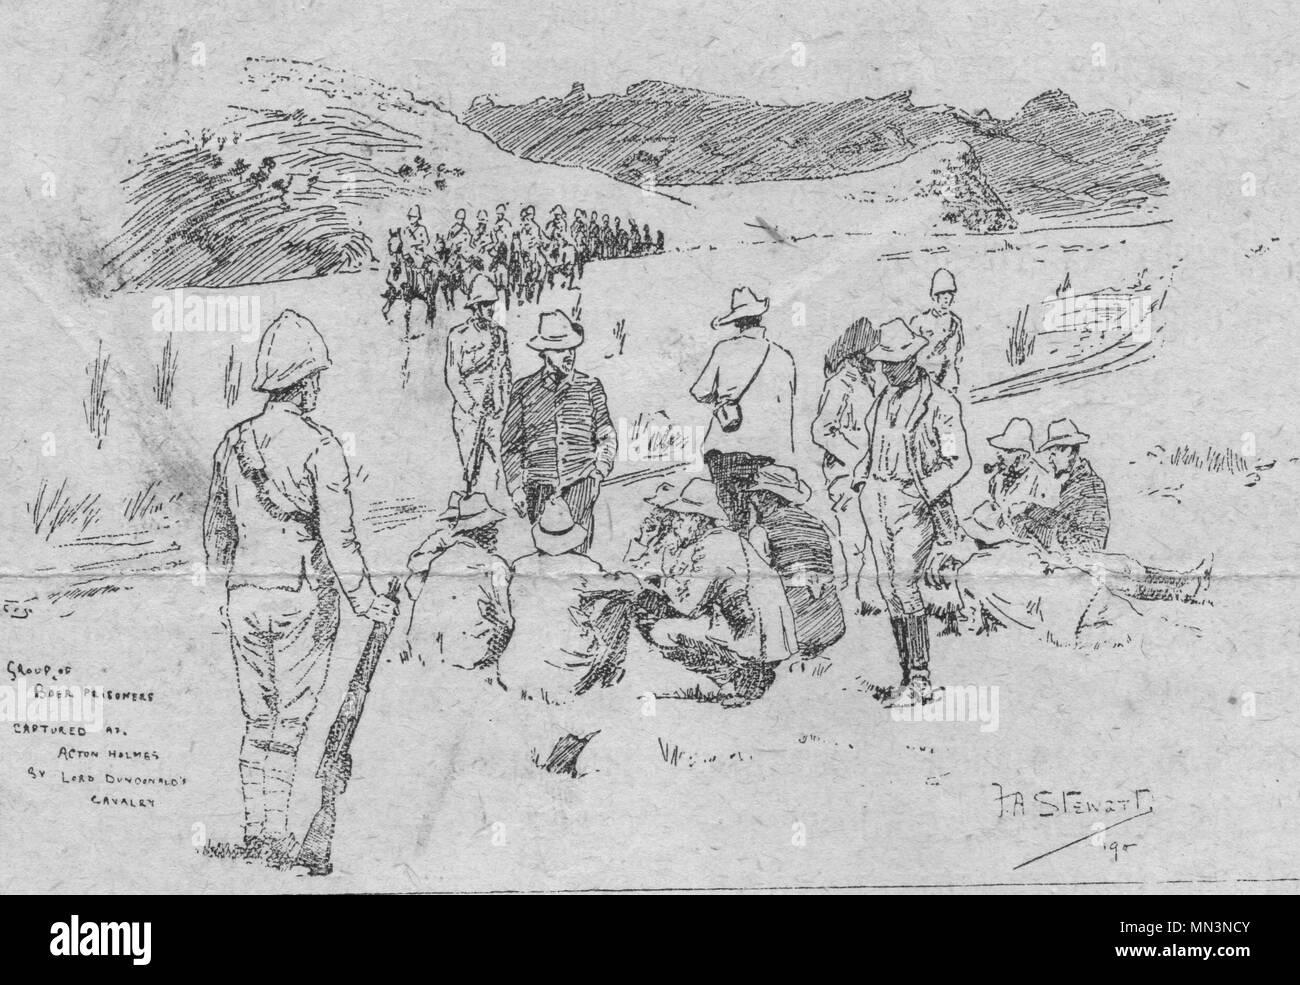 Anglo Boer War. Vintage engraved illustration. Published in magazine in 1900. Stock Photo